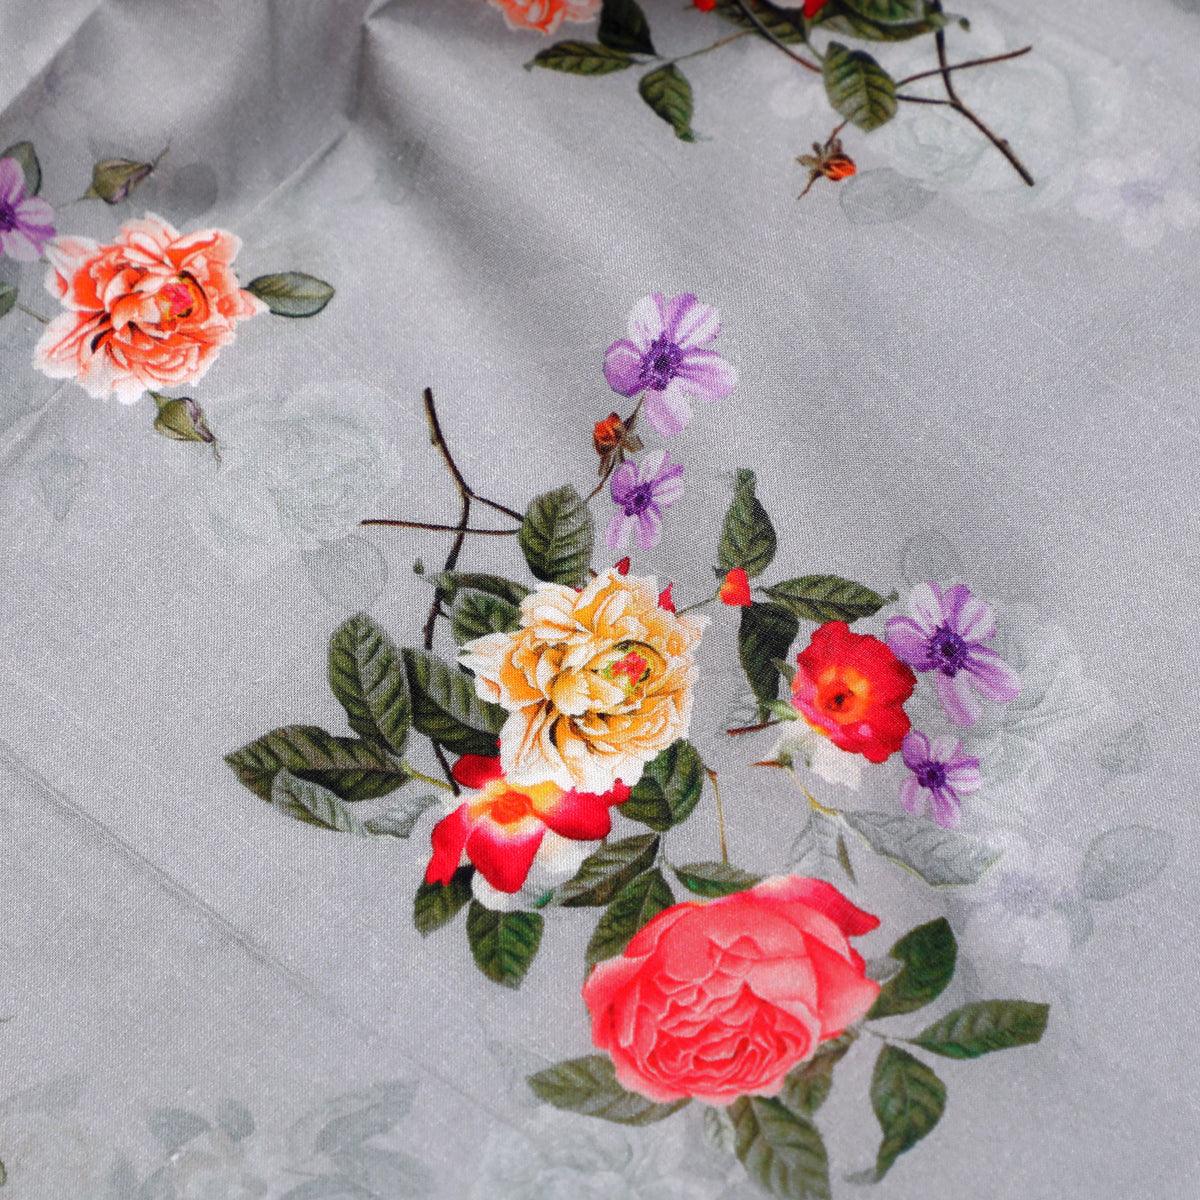 Natural Colourful Roses Digital Printed Fabric - Pure Cotton - FAB VOGUE Studio®